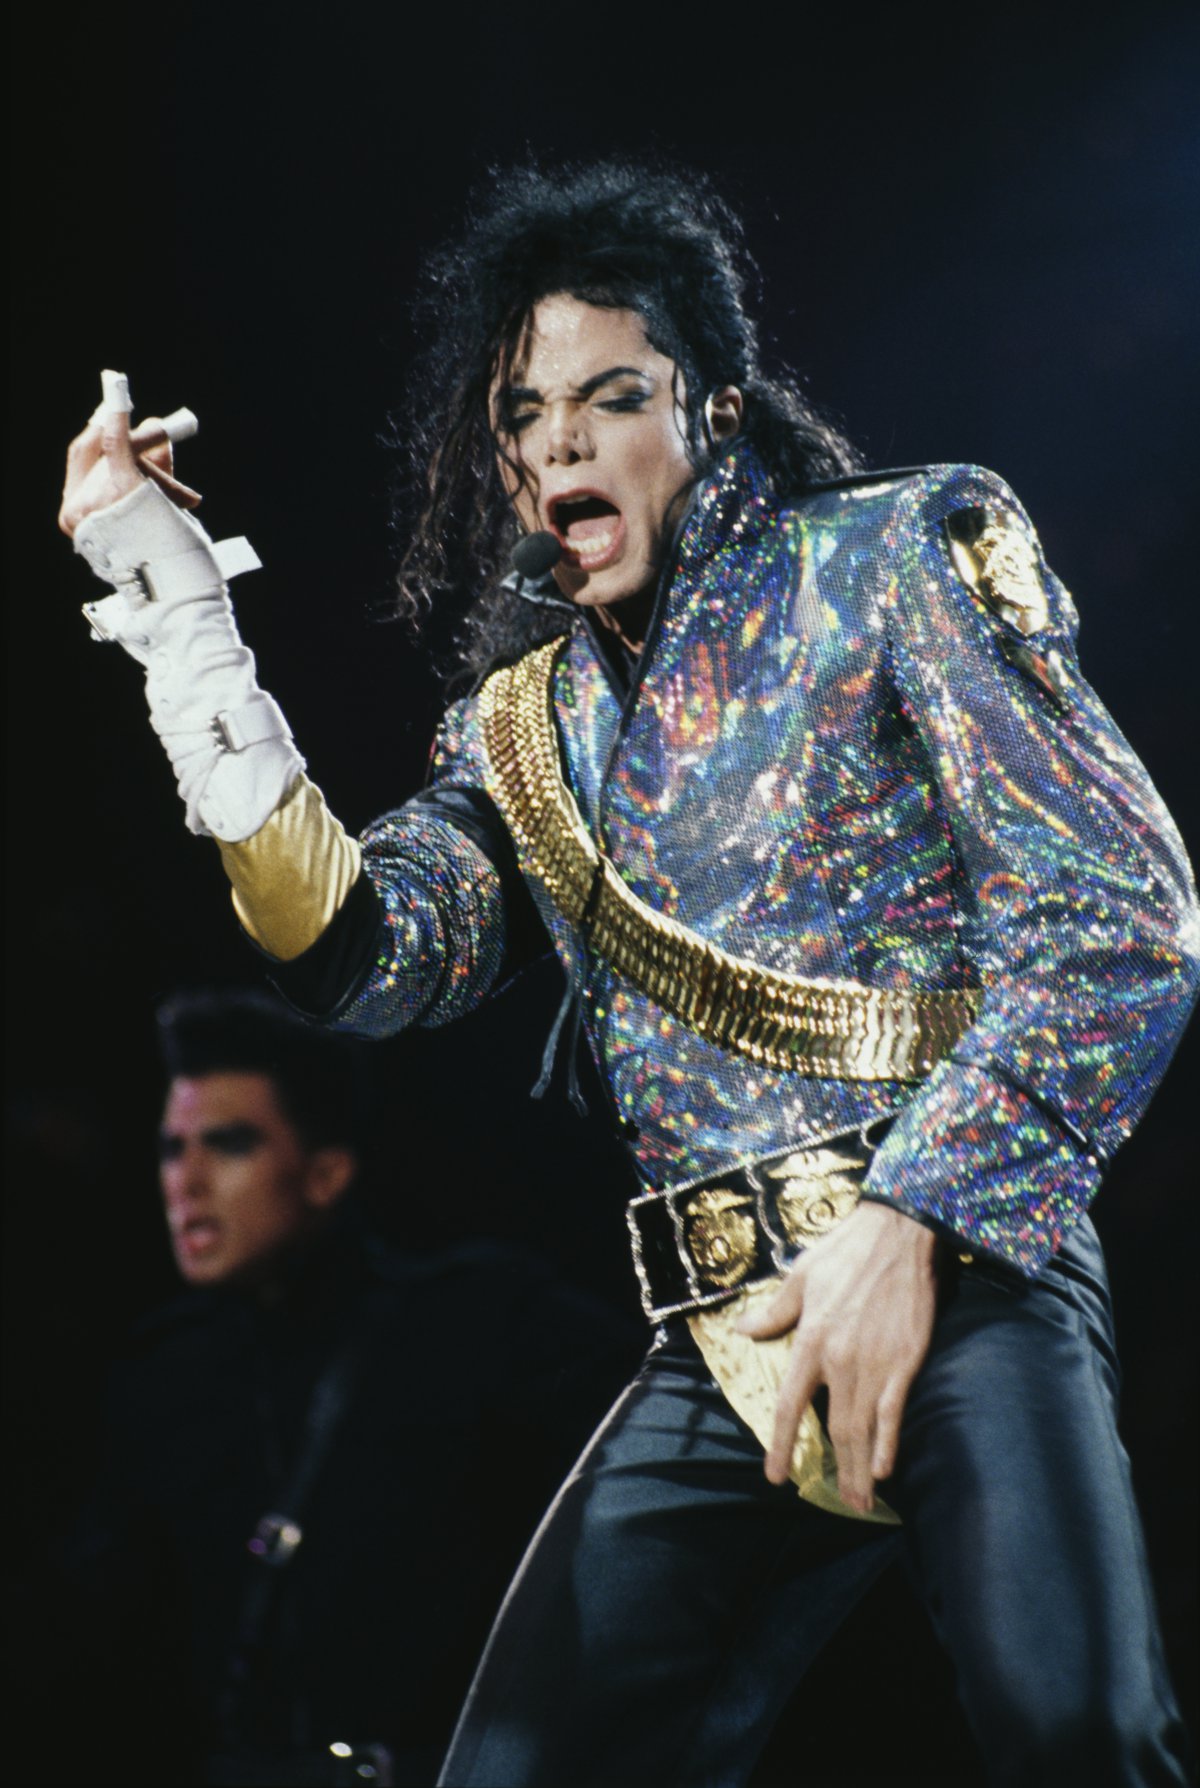 VIRGO: Michael Jackson